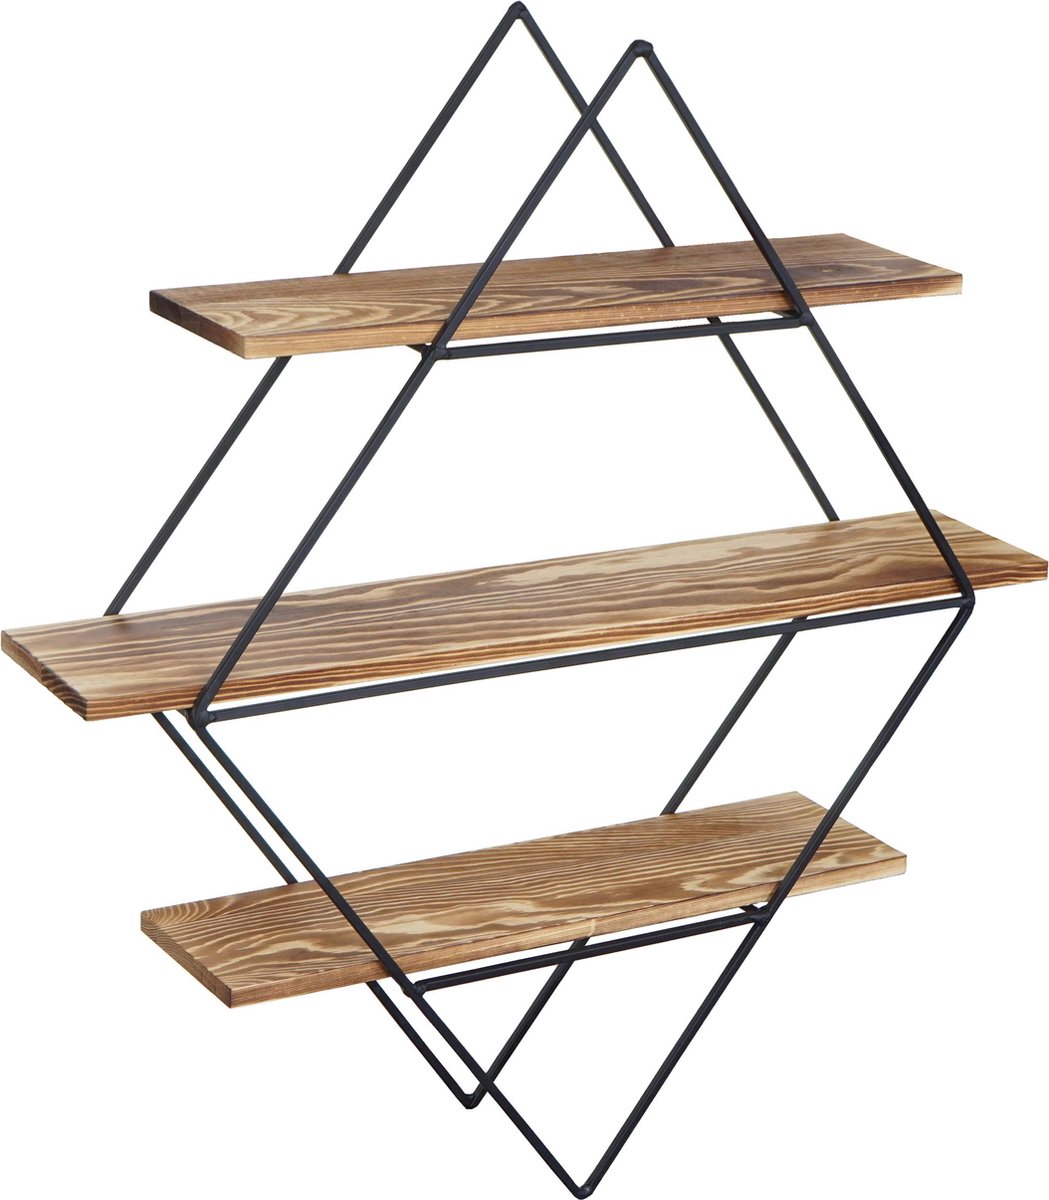 Wandplank MCW-A80, hangende plank, industrieel ontwerp, echt hout 60x55x12cm ~ bruin